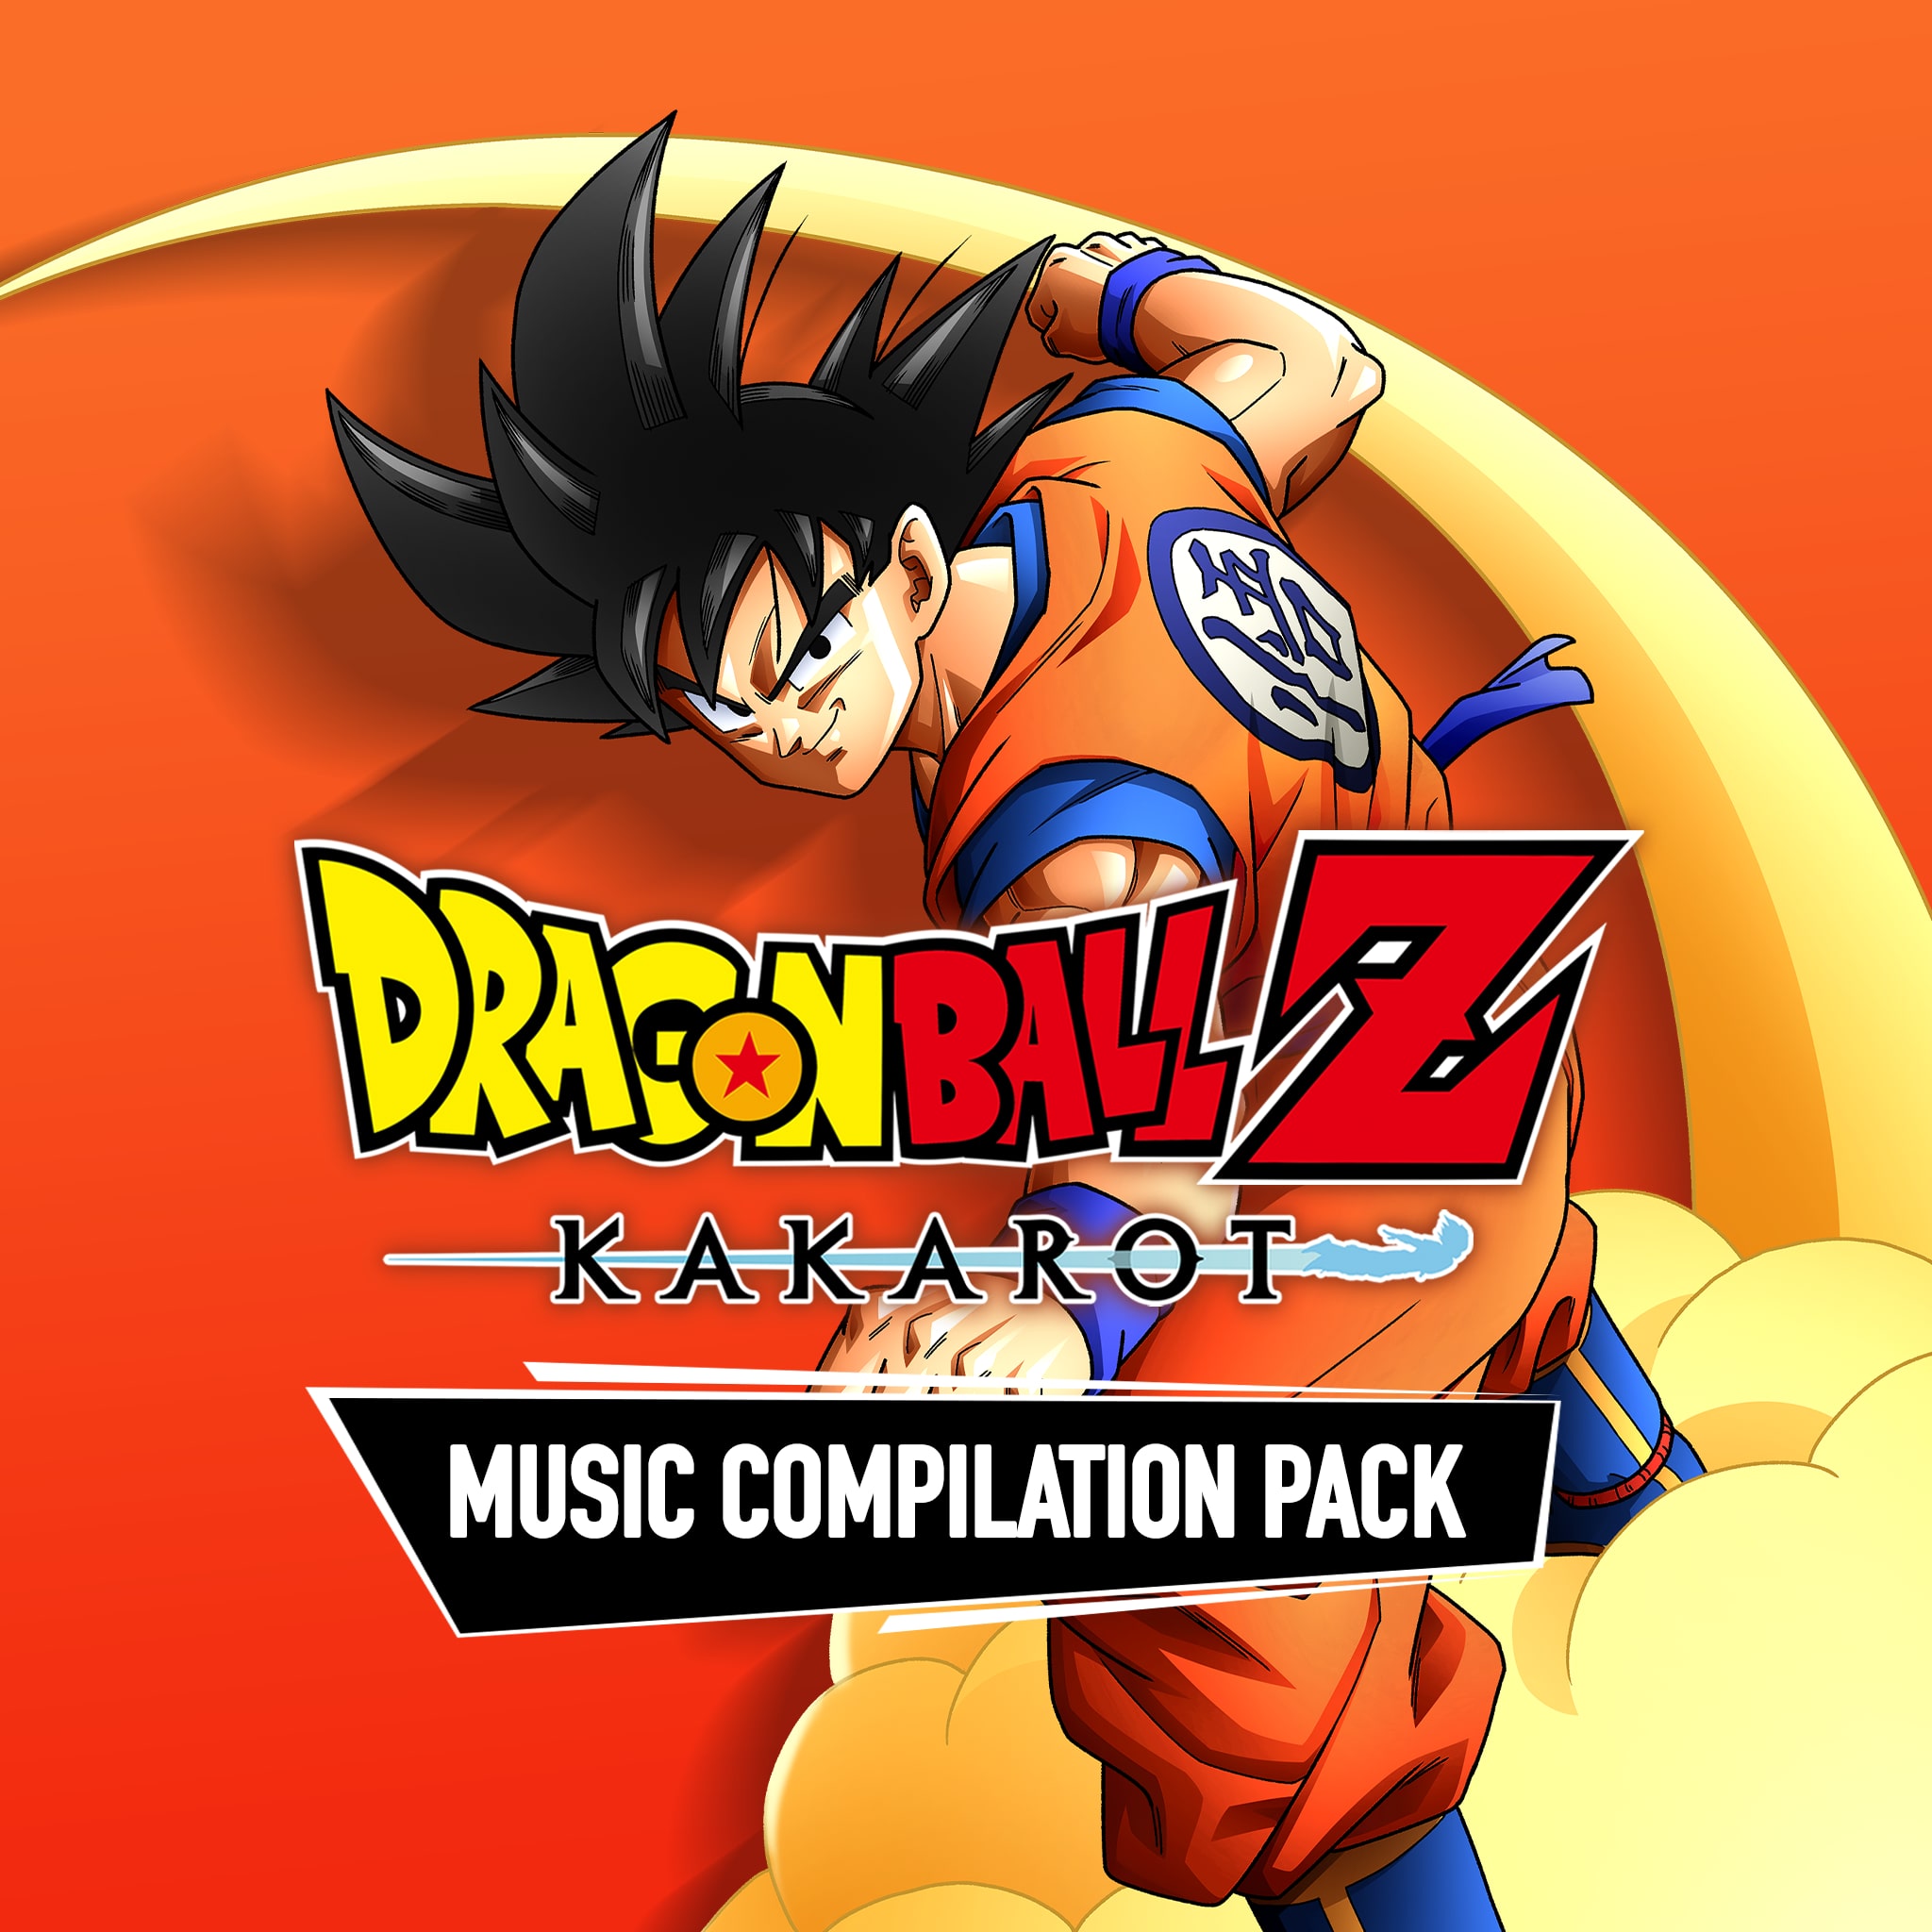 Dragon Ball Z: Kakarot, Abertura em PT-BR